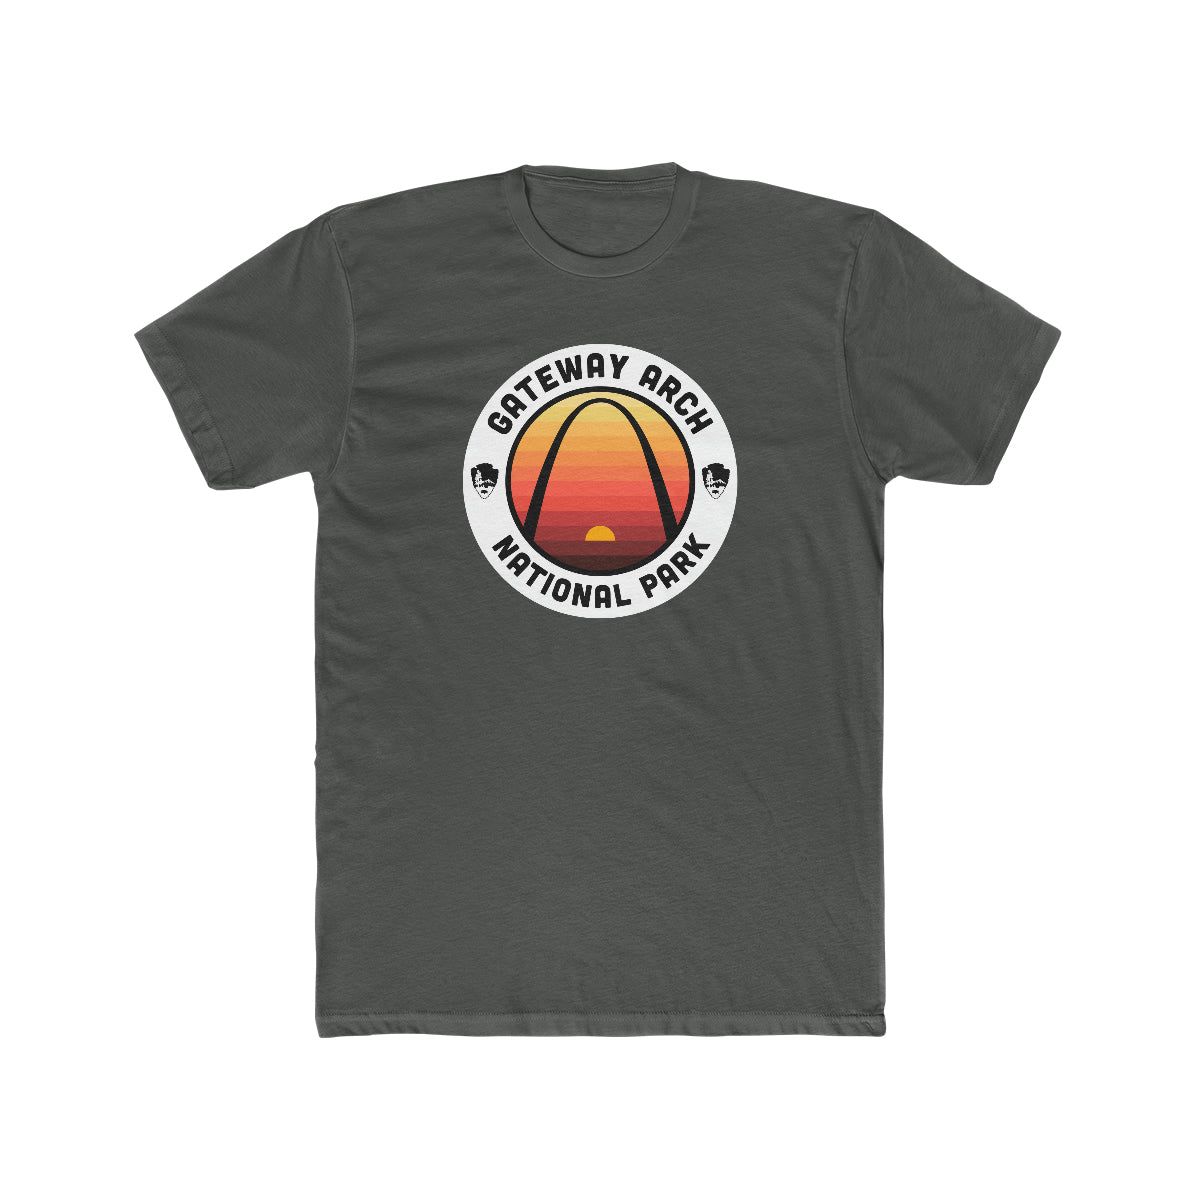 Gateway Arch National Park T-Shirt - Round Badge Design